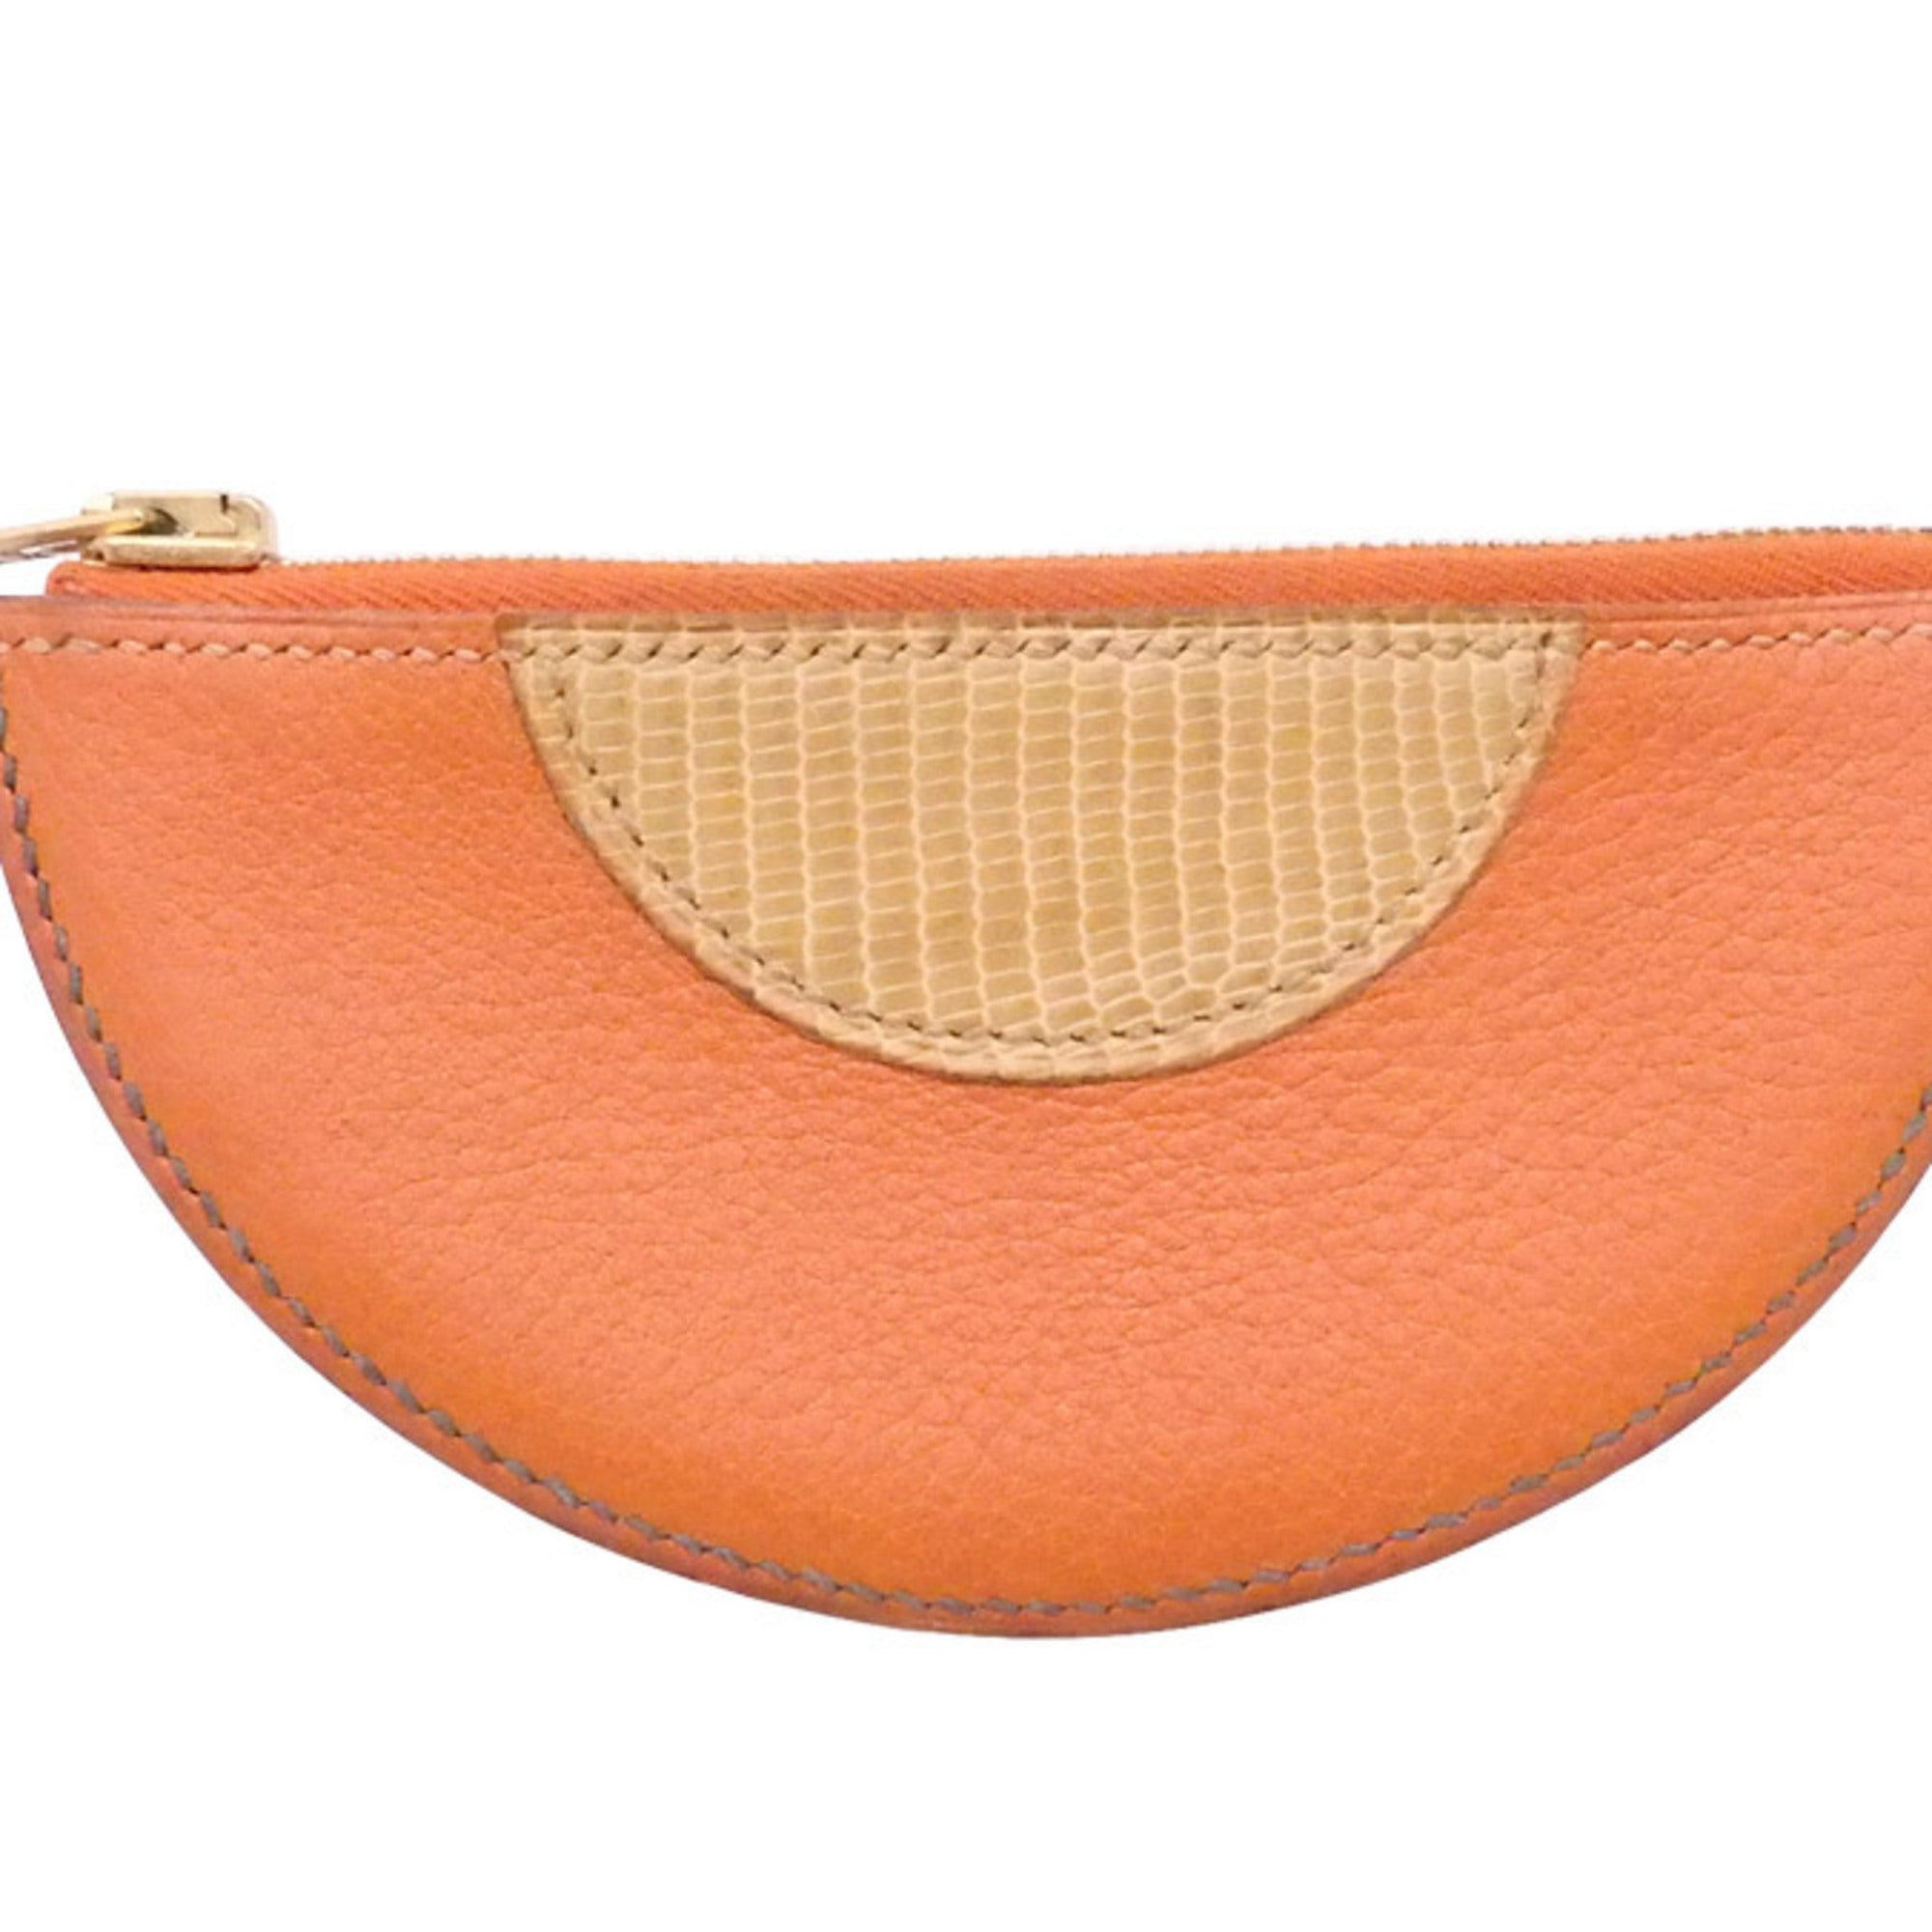 Fruit Fashion Trend - Orange, Apple, Cherry Prints | Betsey johnson handbags,  Betsy johnson handbags, Betsey johnson